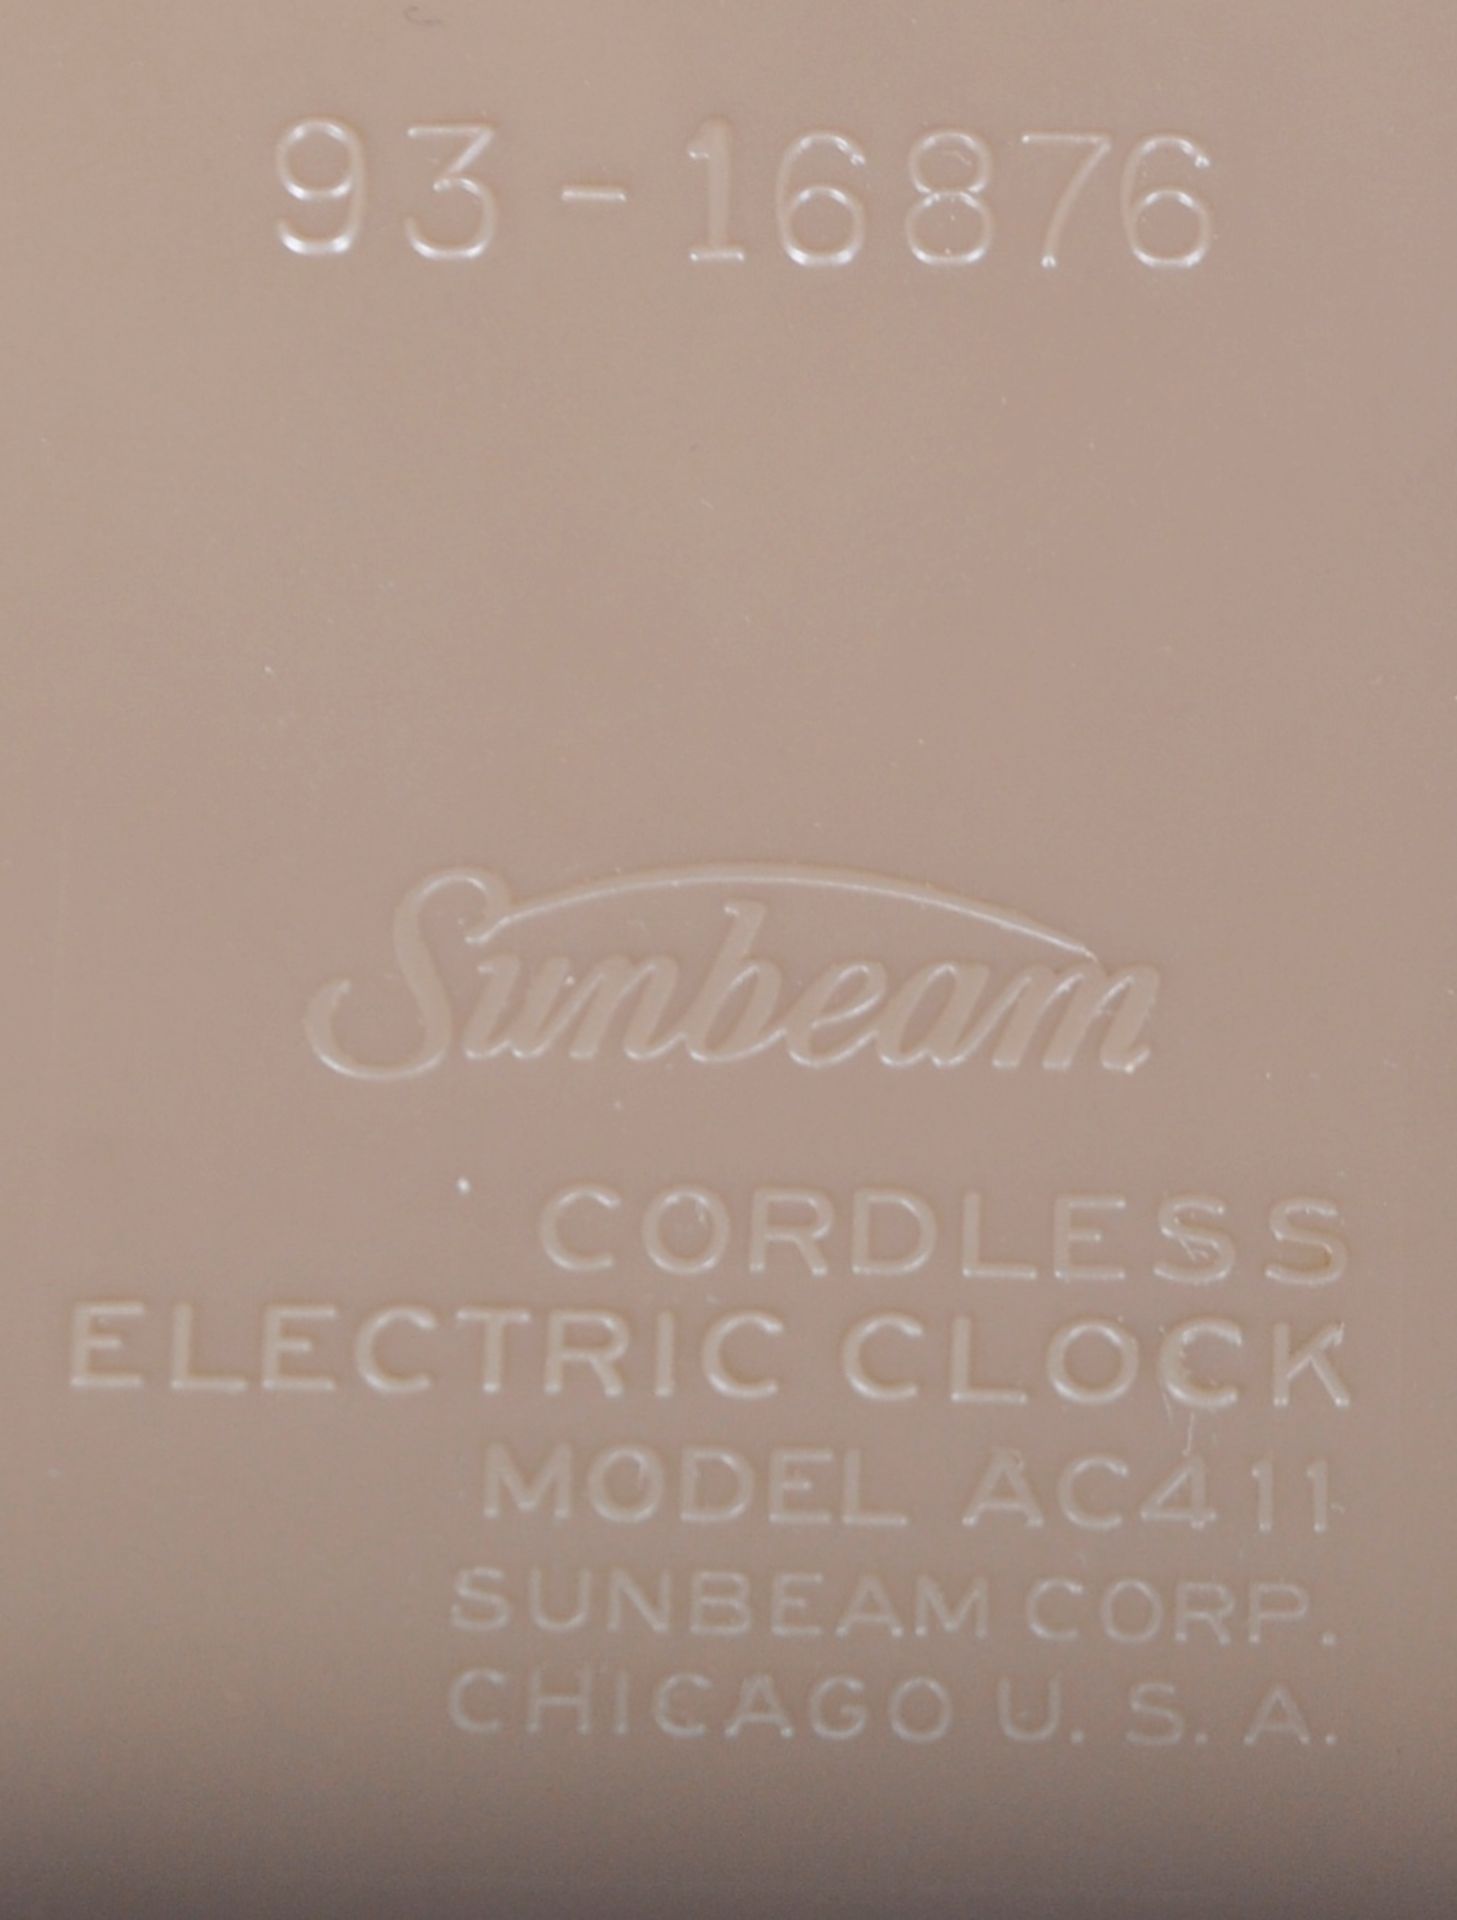 SUNBEAM - MODEL AC411 - RETRO AMERICAN HANGING CLOCK - Image 7 of 7